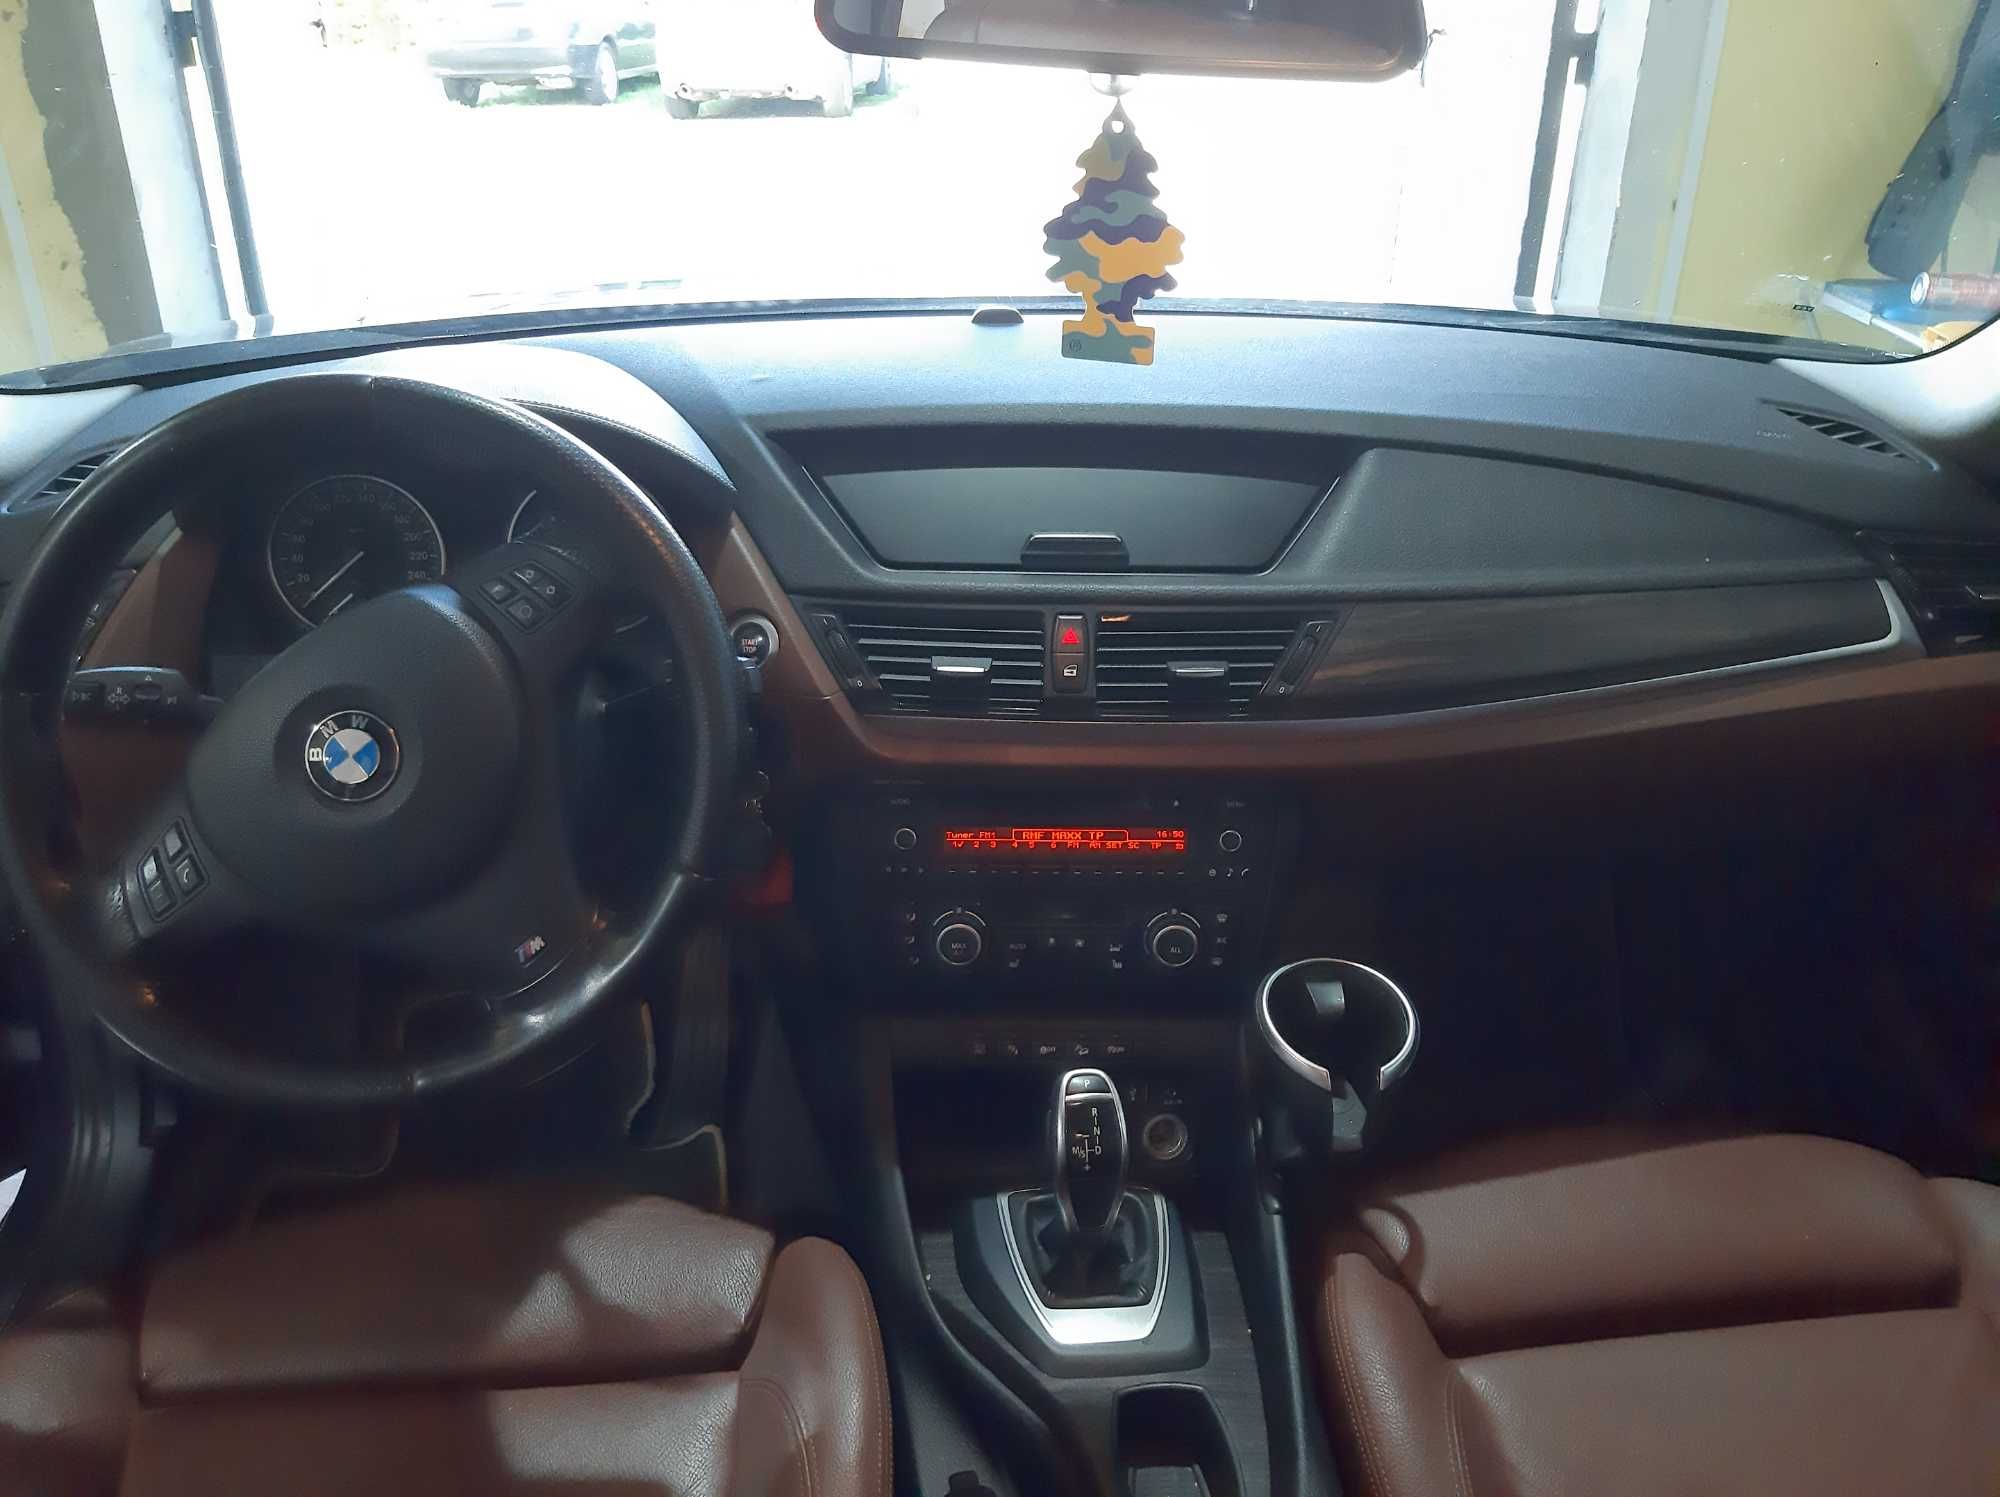 BMW X1, 2.0 Disel